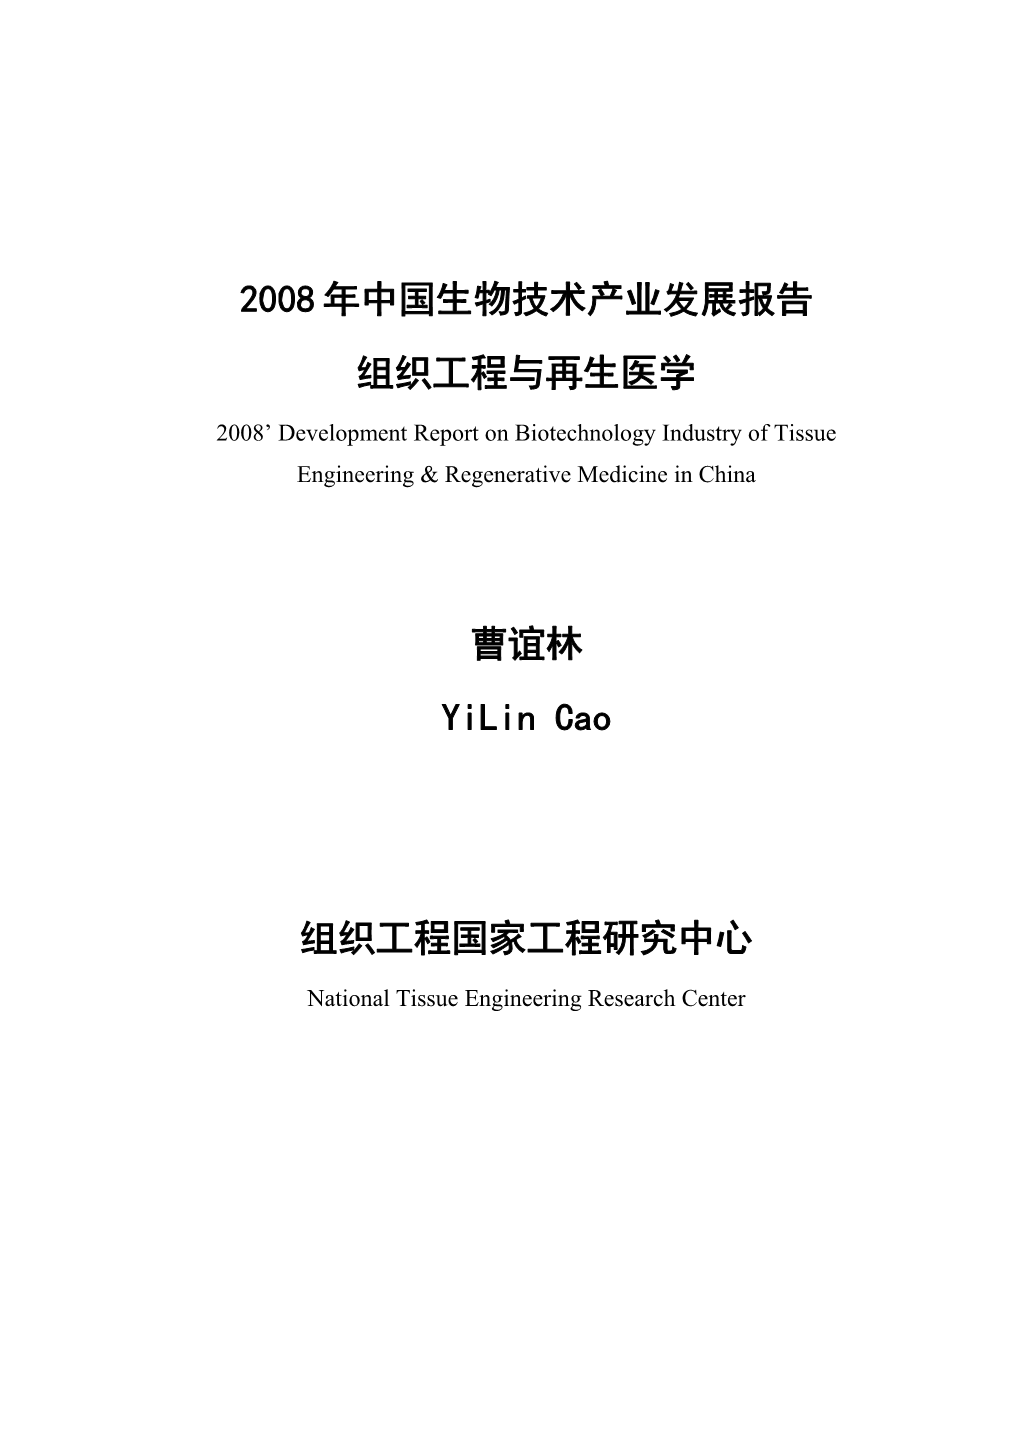 2008 Development Report on Biotechnology Industry of Tissue Engineering & Regenerative